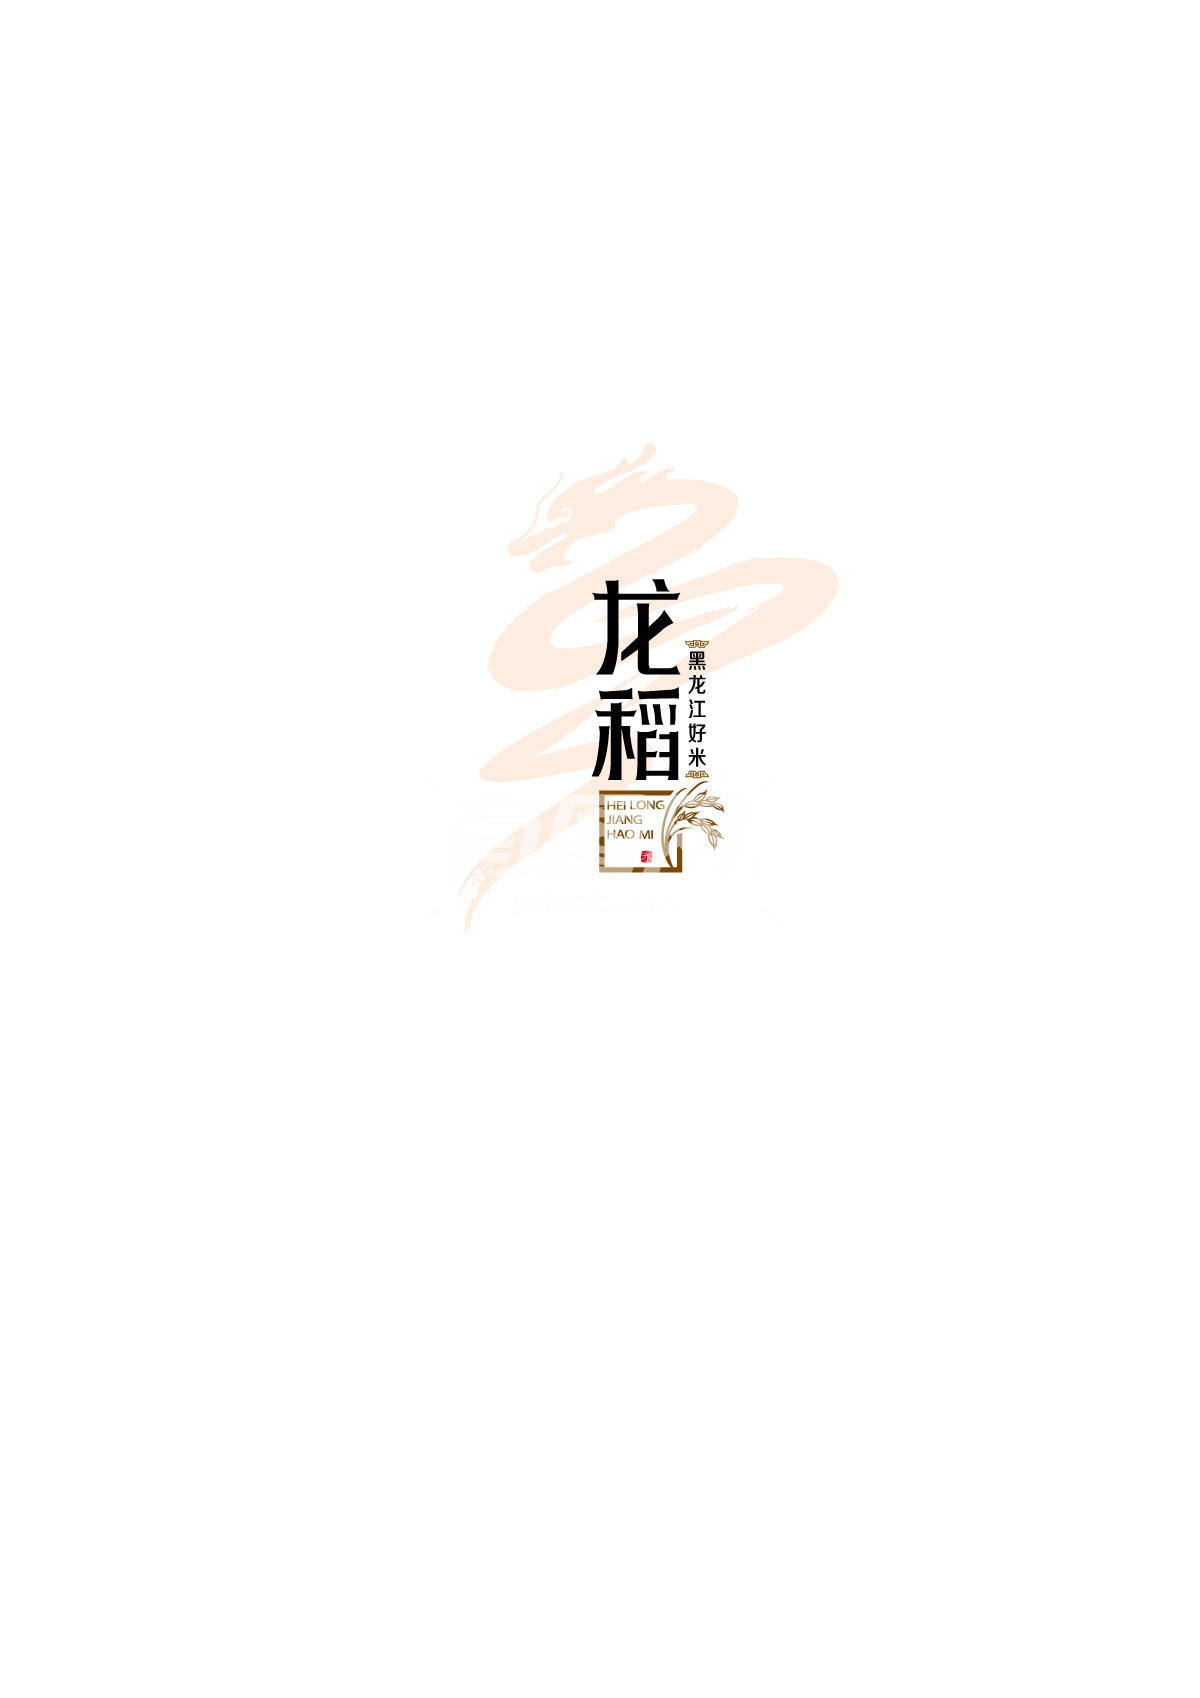 龙稻logo